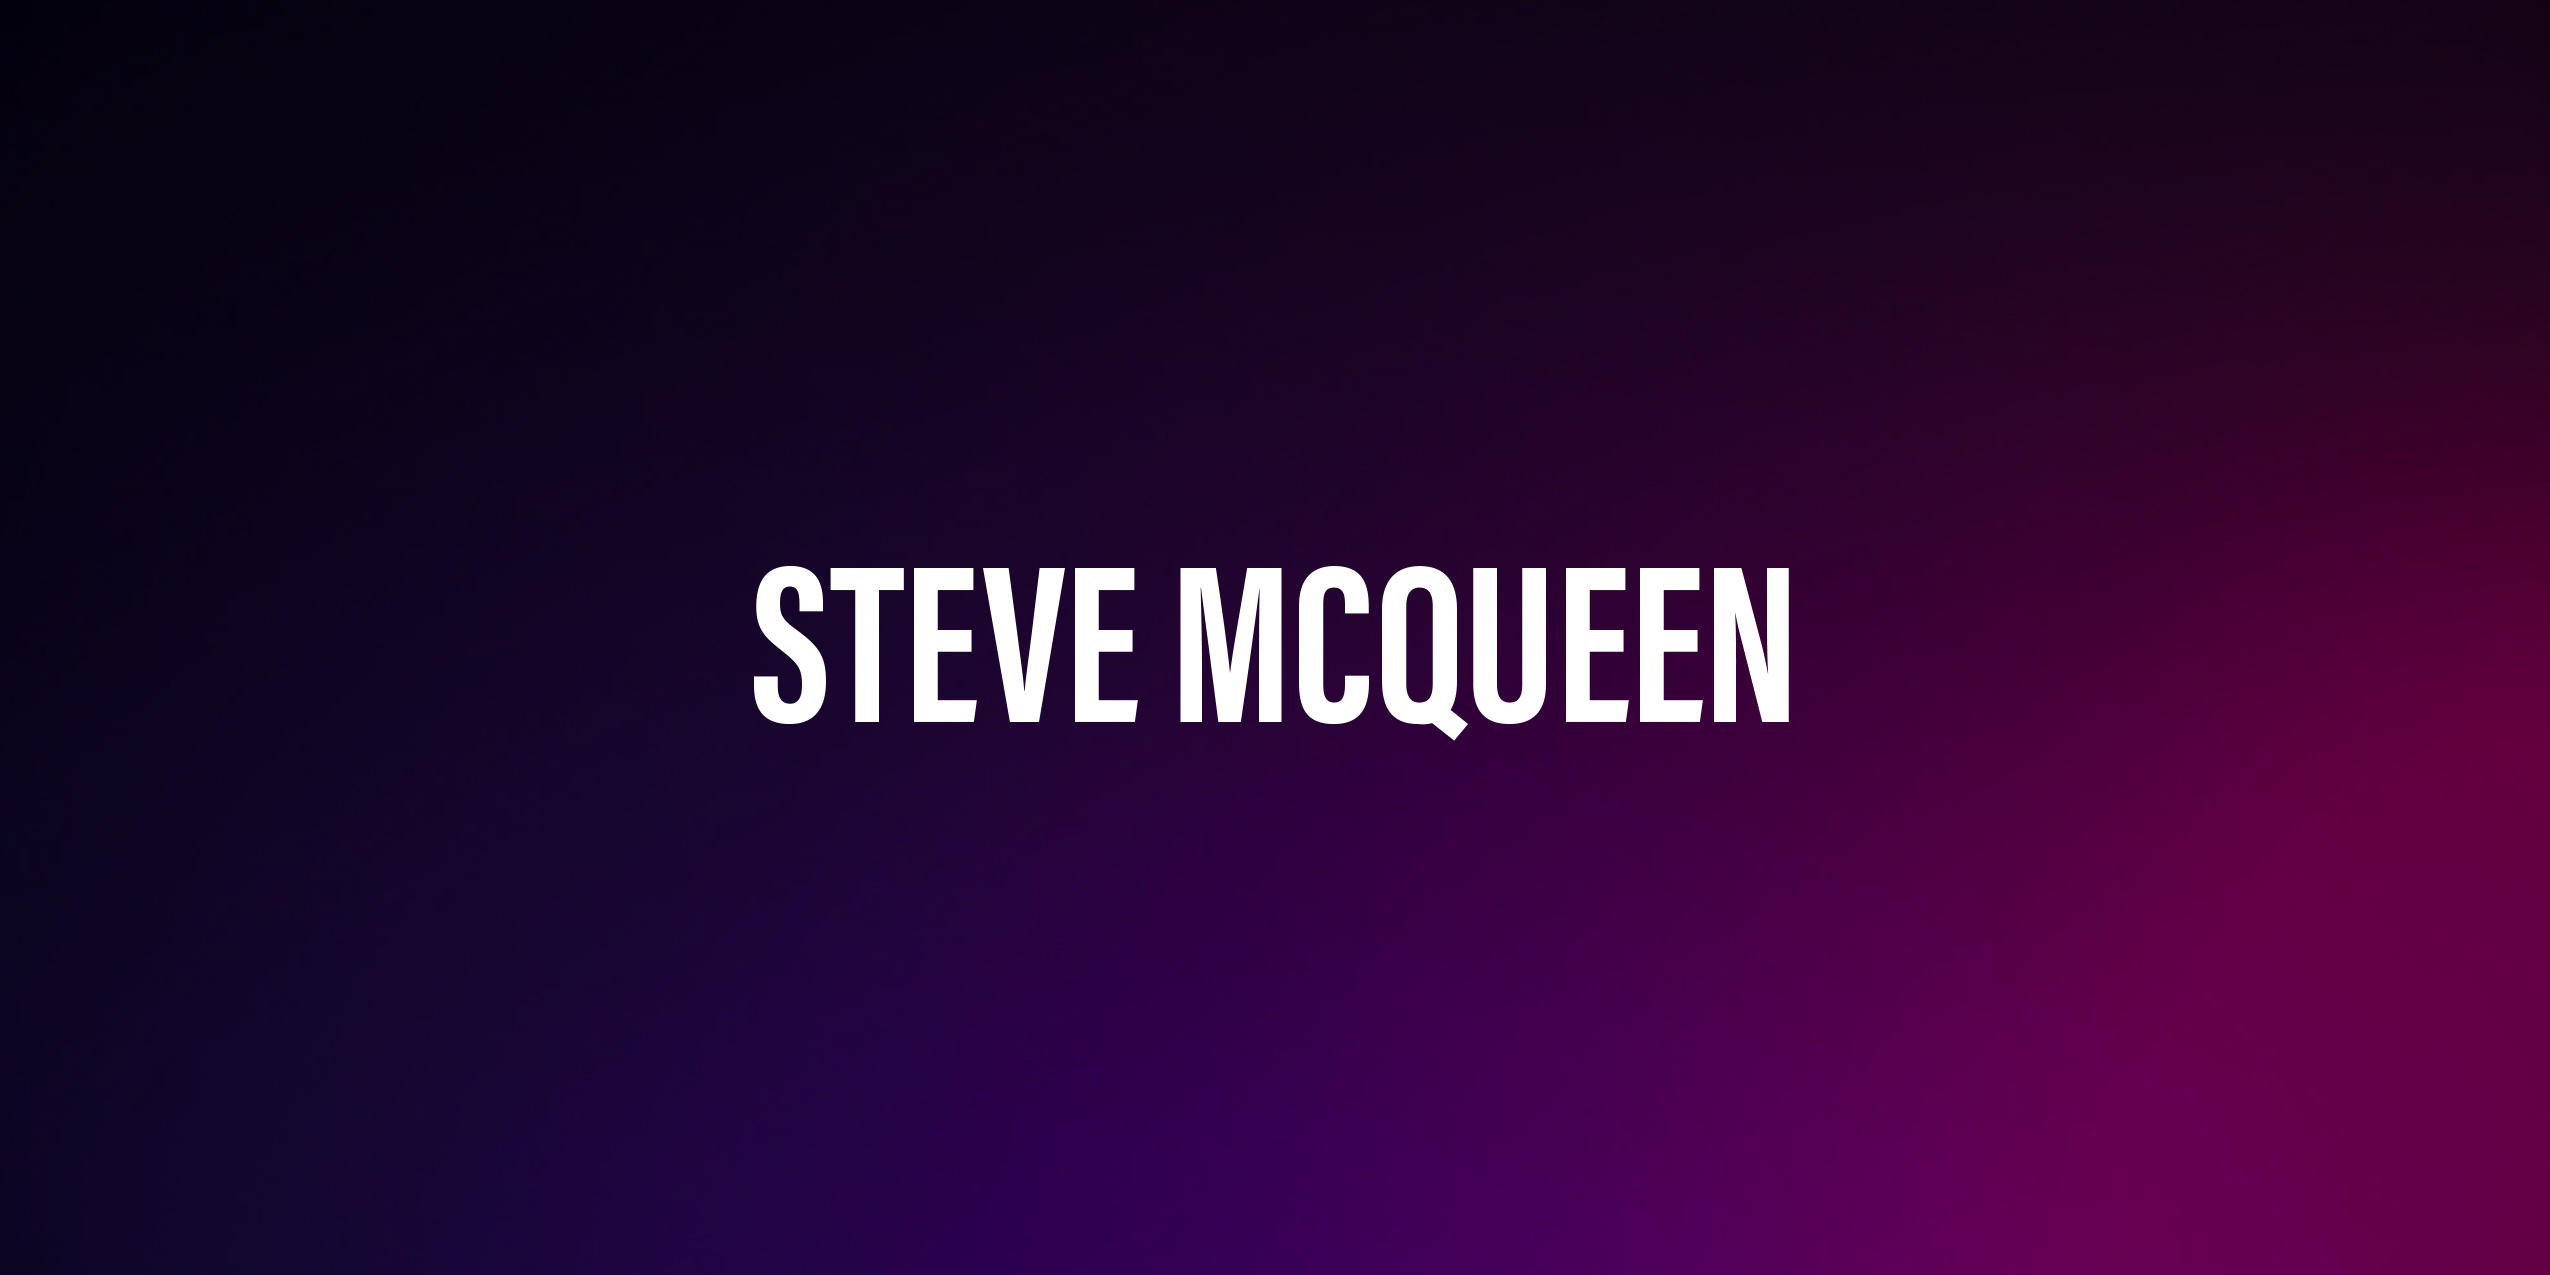 Steve Mcqueen – życiorys i filmografia